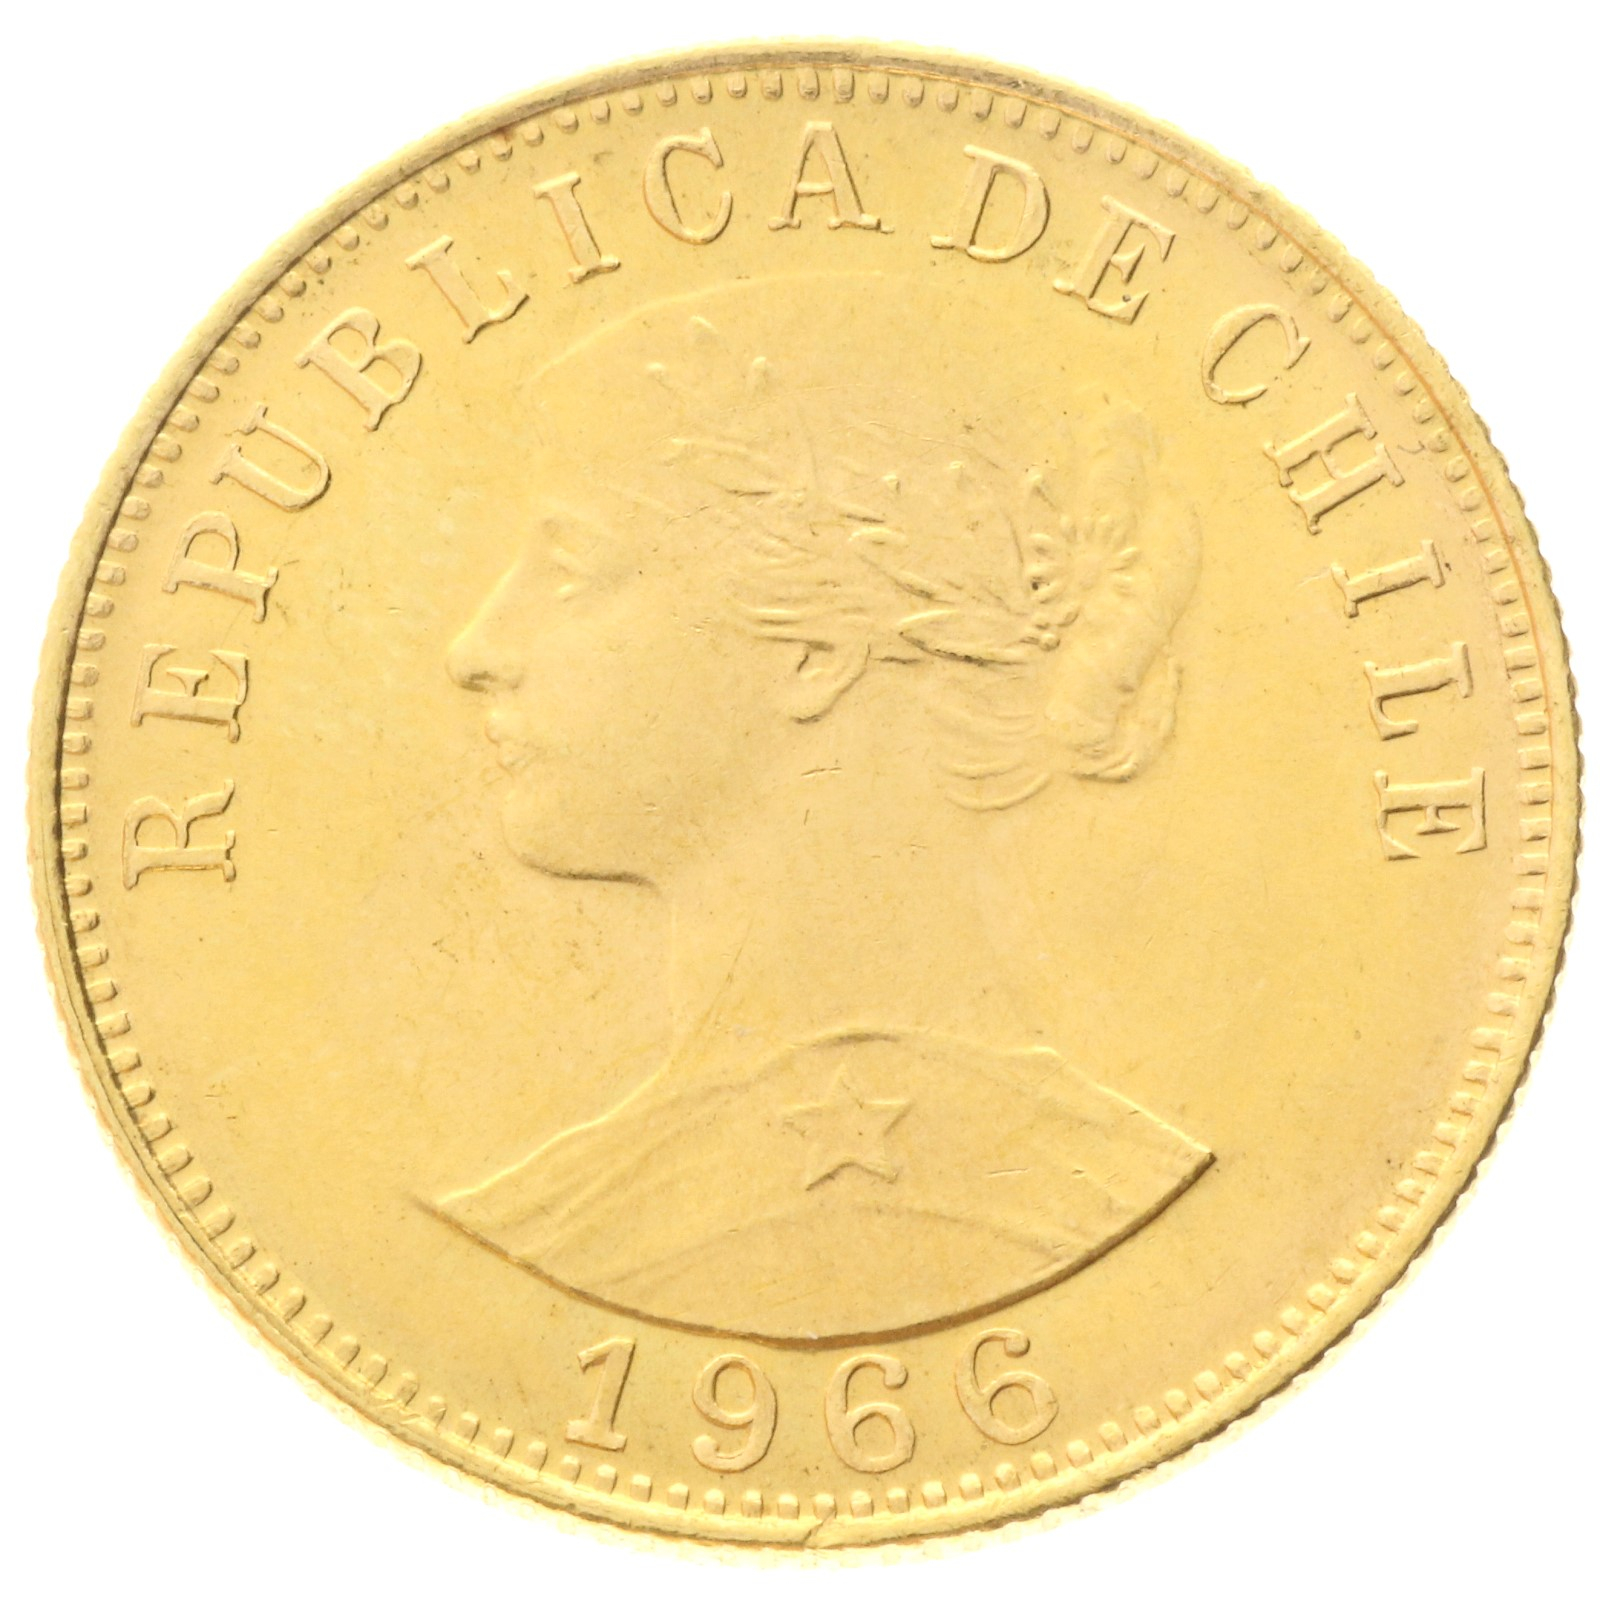 Chile - 50 pesos - 1966